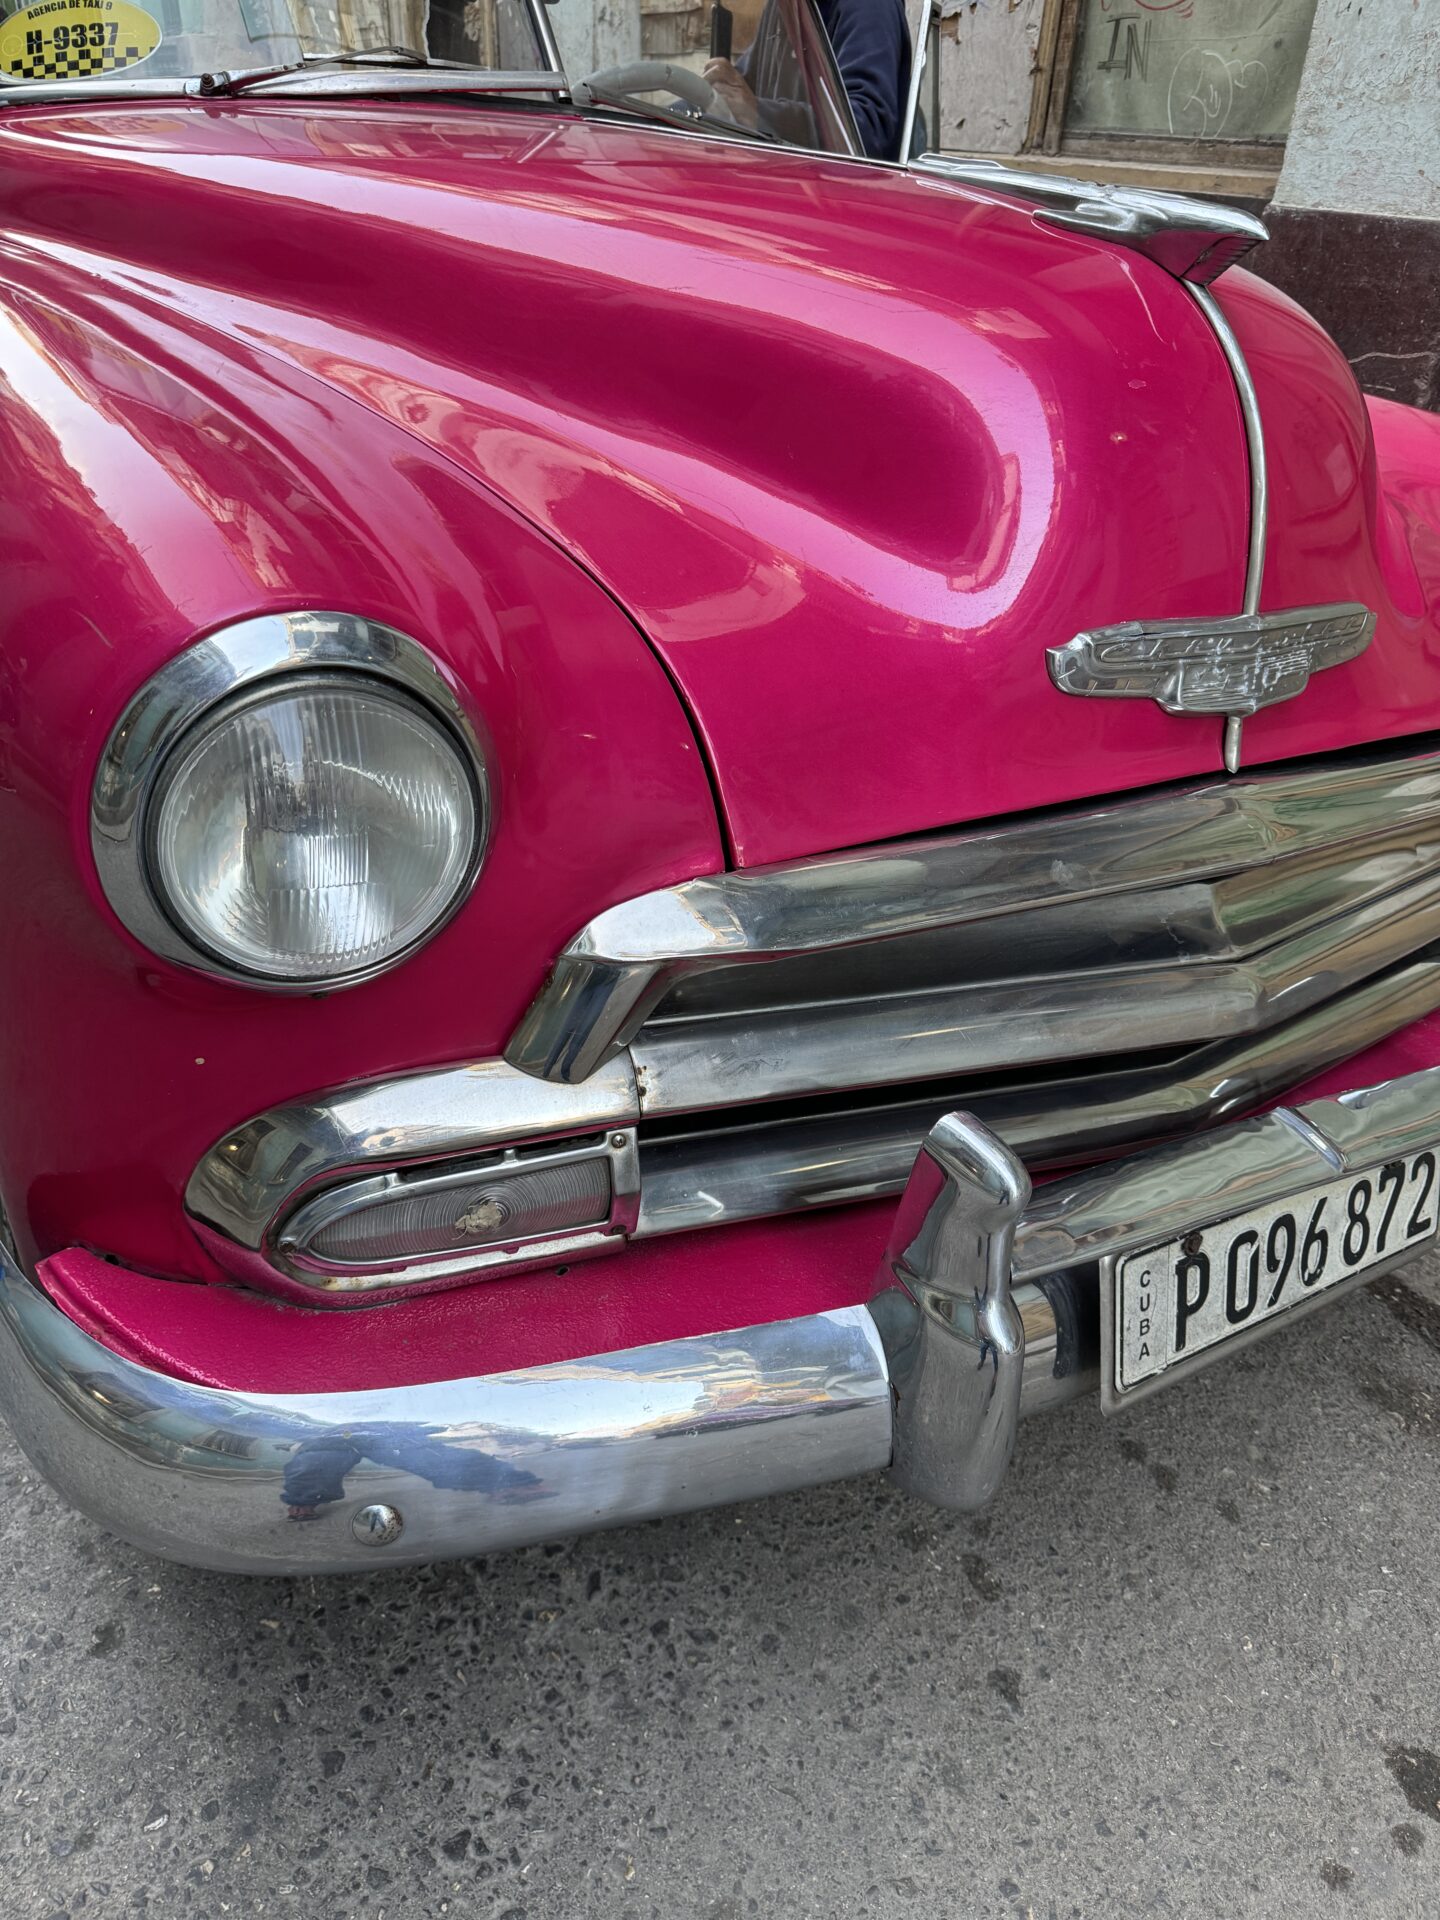 Bright pink classic car in Old Havana, by Carol Schiraldi of Carol's Little World